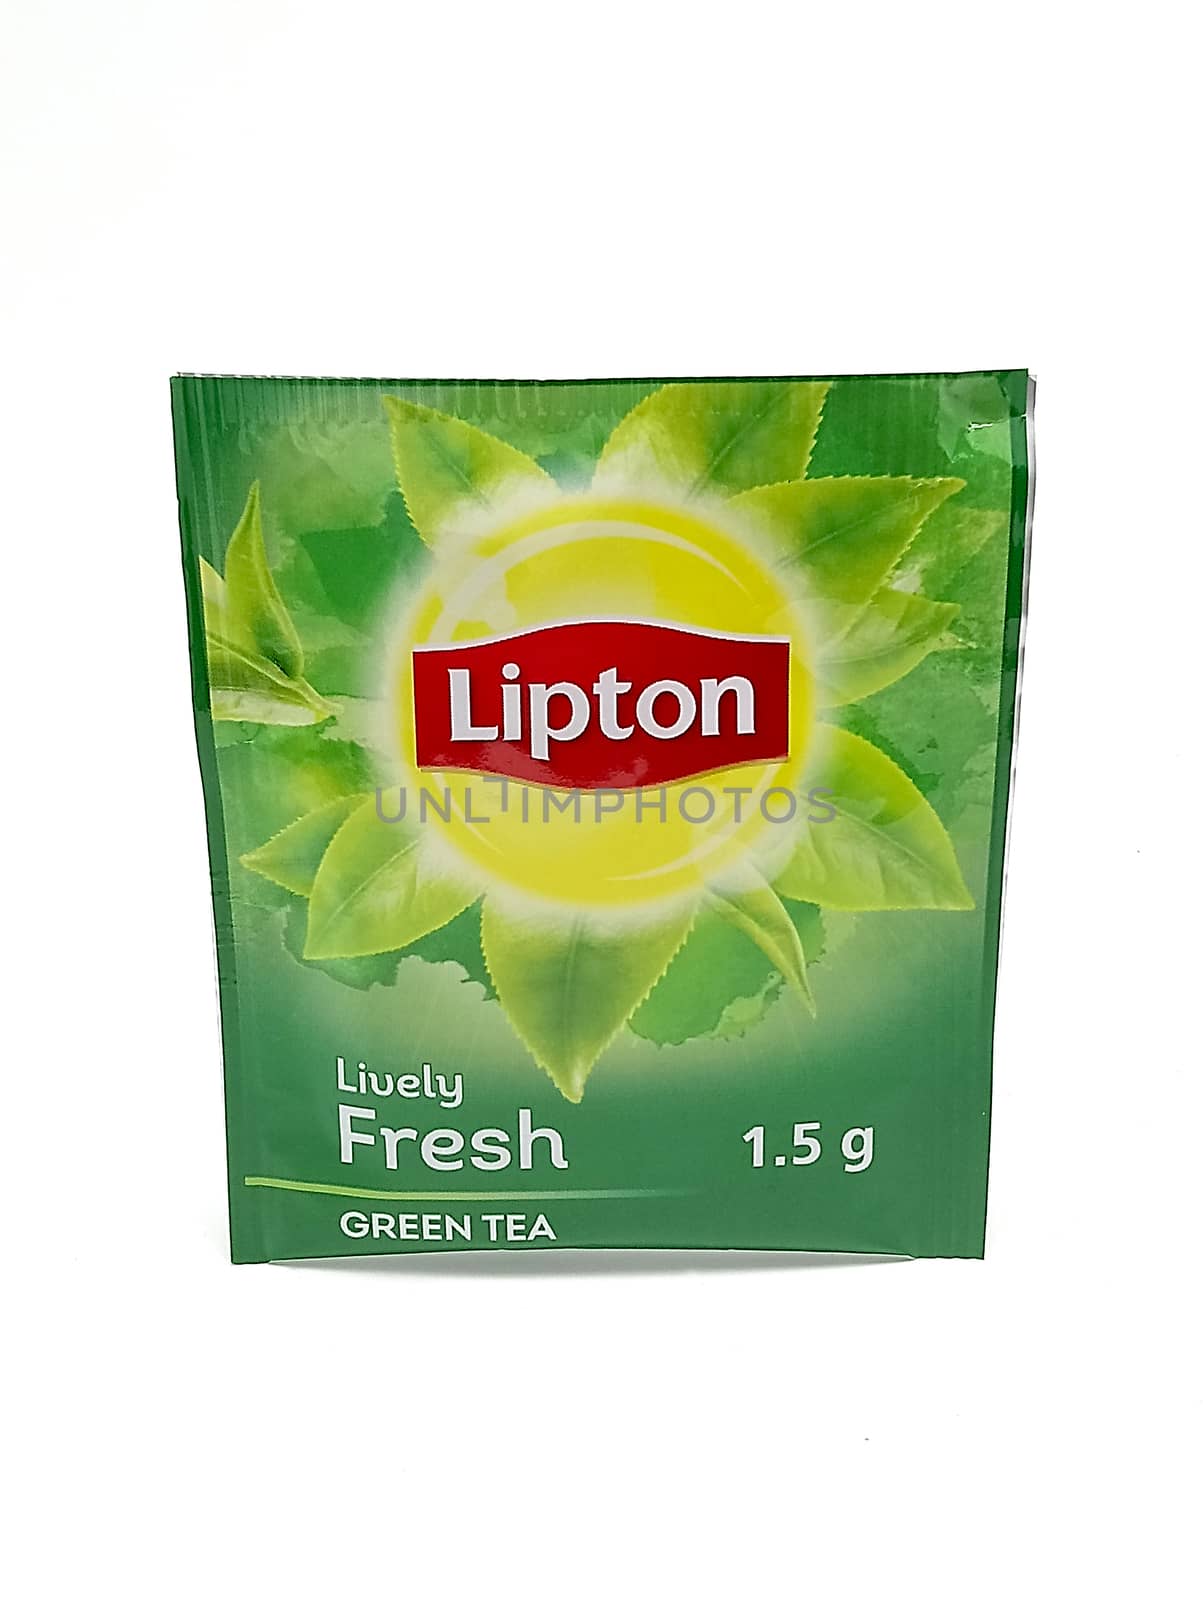 Lipton green tea in Manila, Philippines by imwaltersy